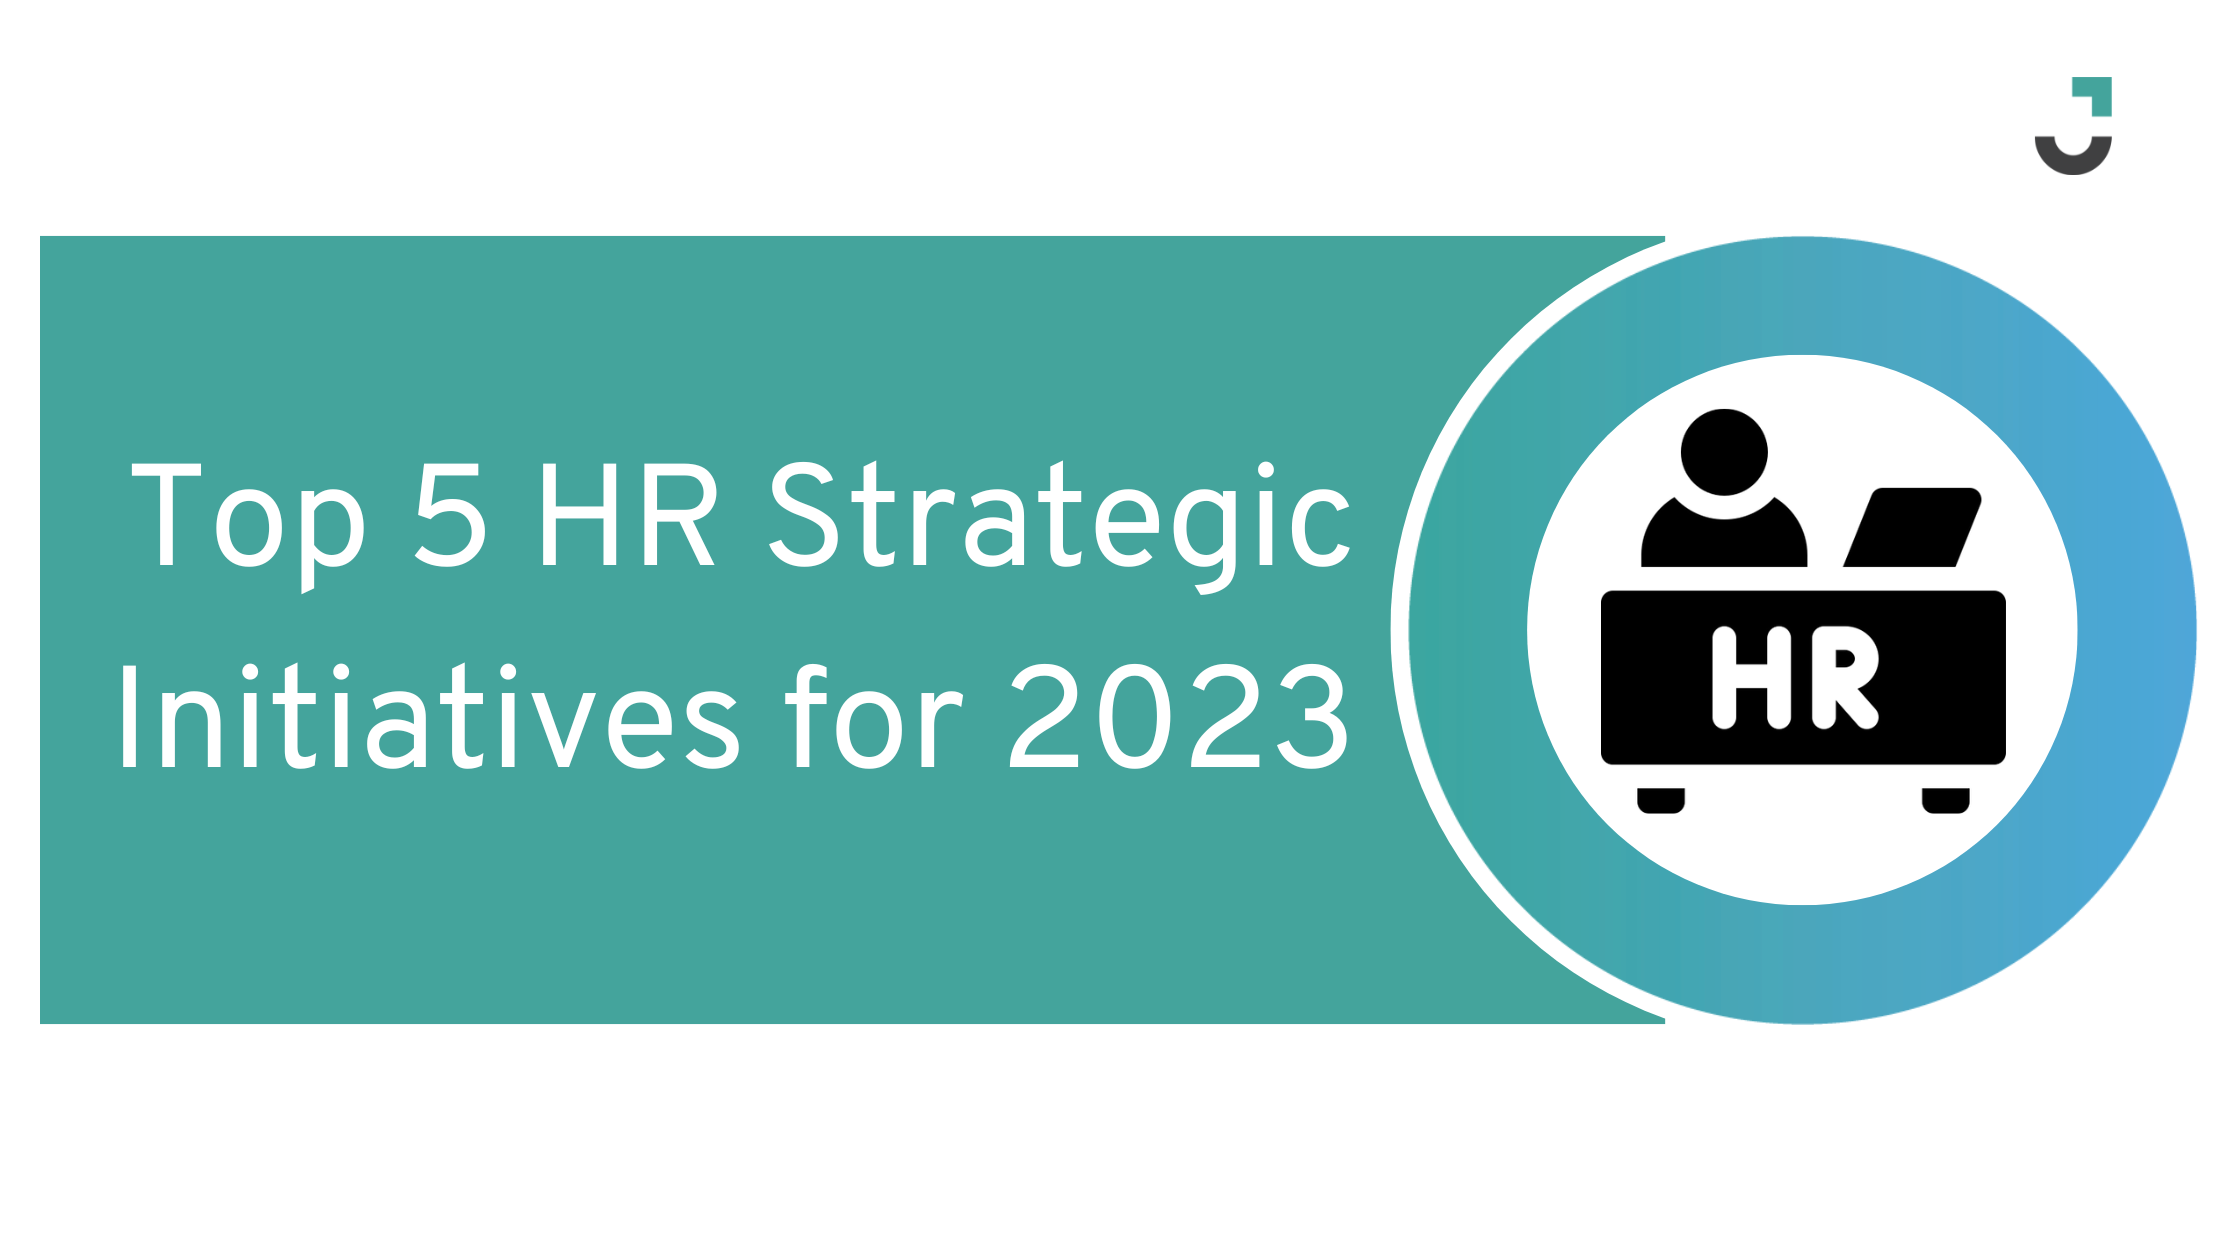 Top 5 HR Strategic Initiatives for 2023